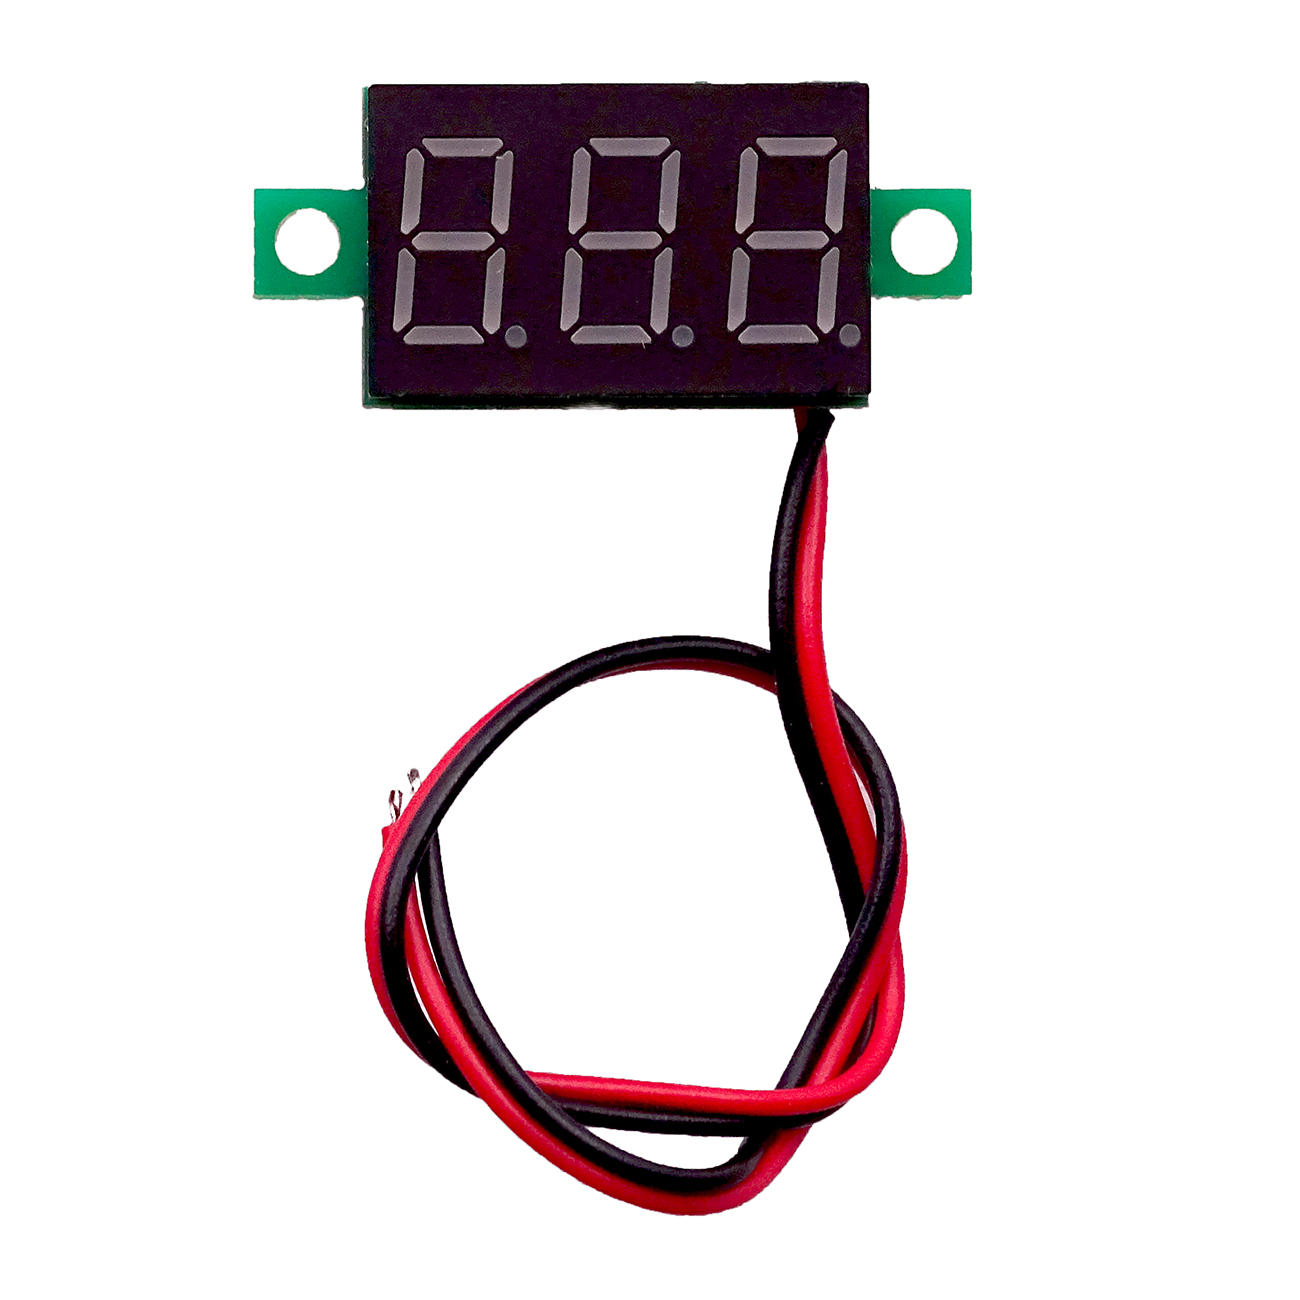 0.28 inch DC 12V Mini LCD Digital Voltmeter Voltage Meter Panel Volt Tester Detector Monitor 2 Wire Red Green Blue LED